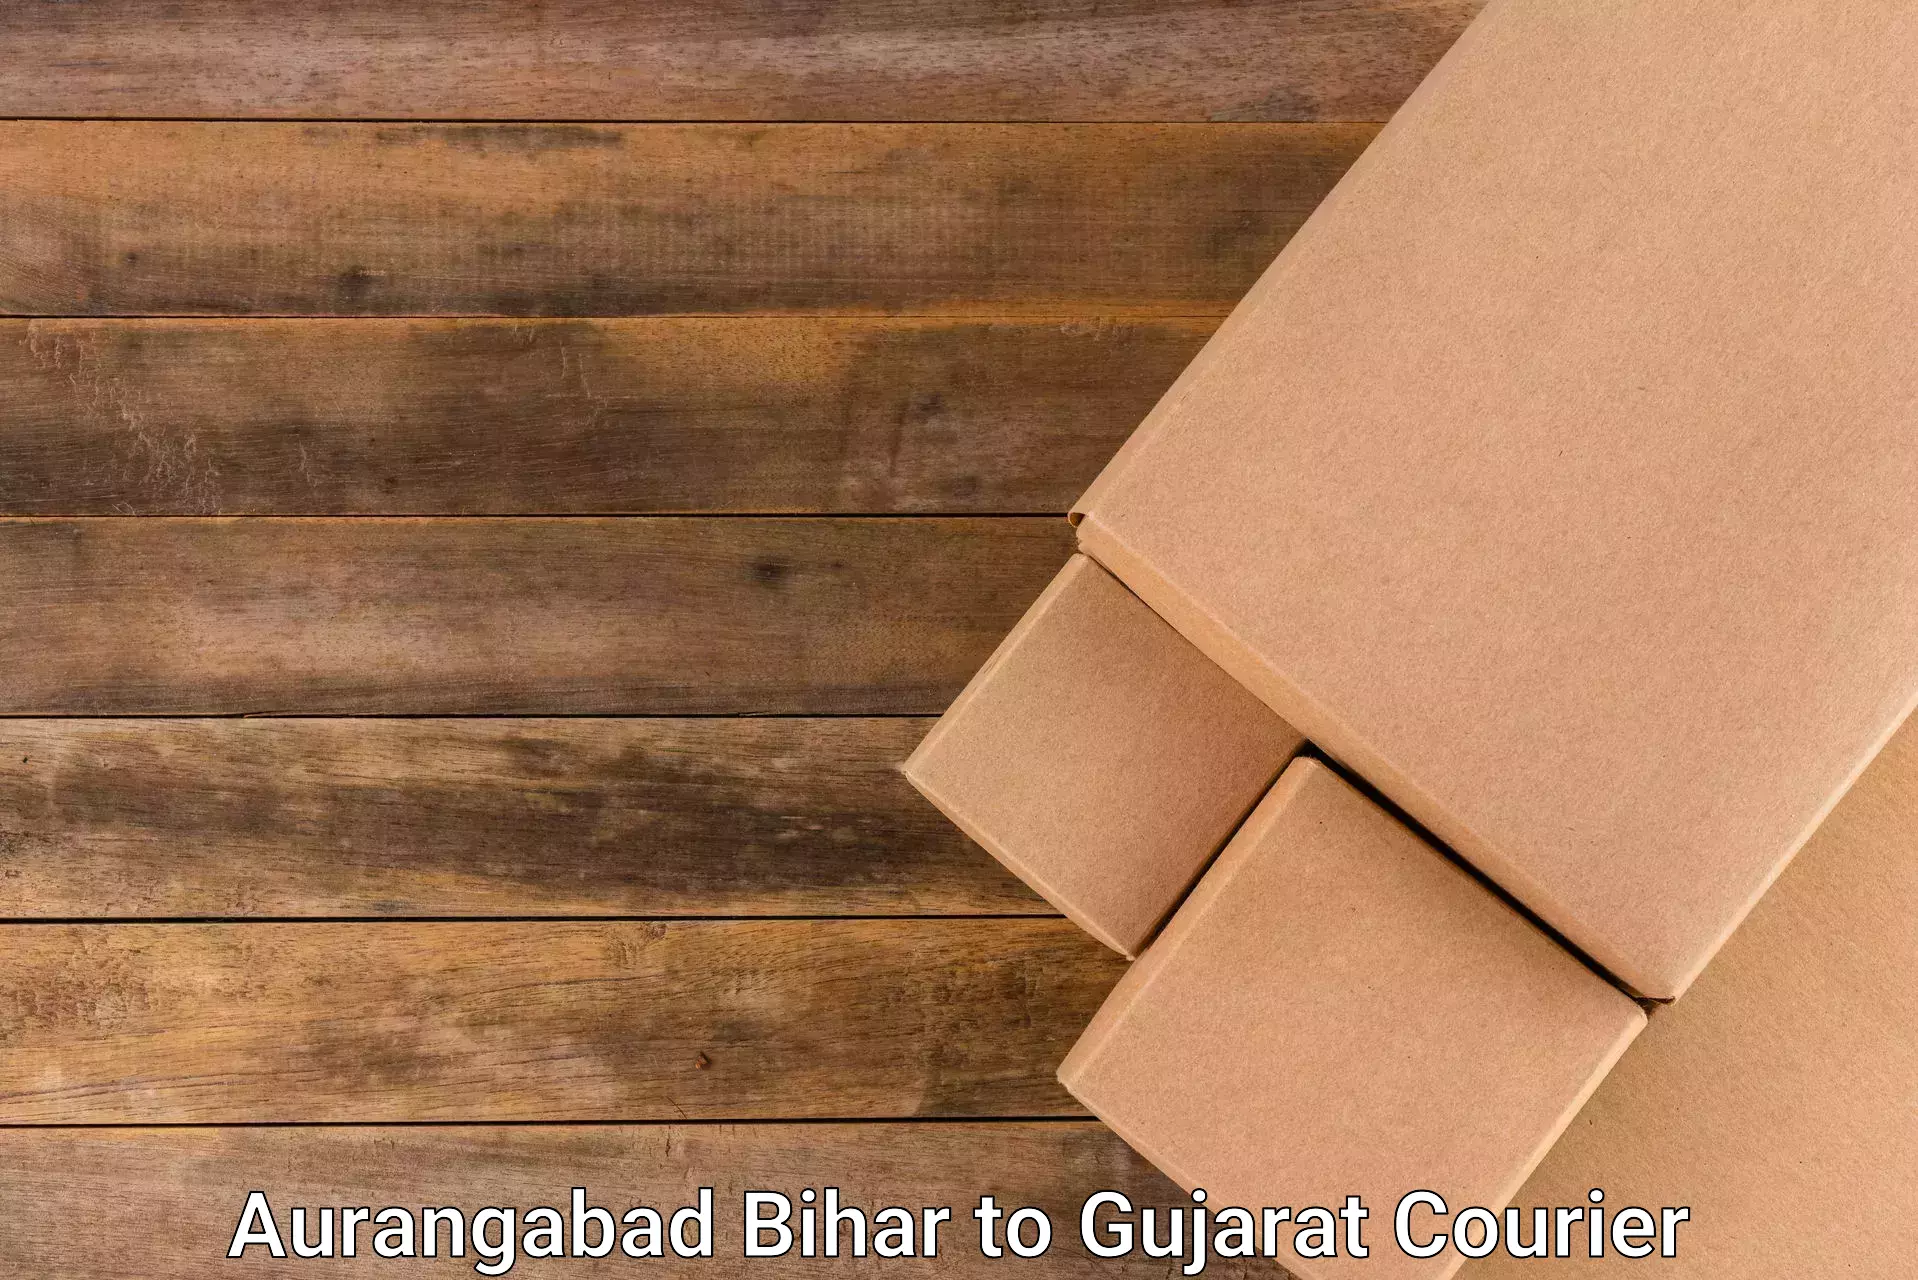 Urgent courier needs Aurangabad Bihar to Bhesan